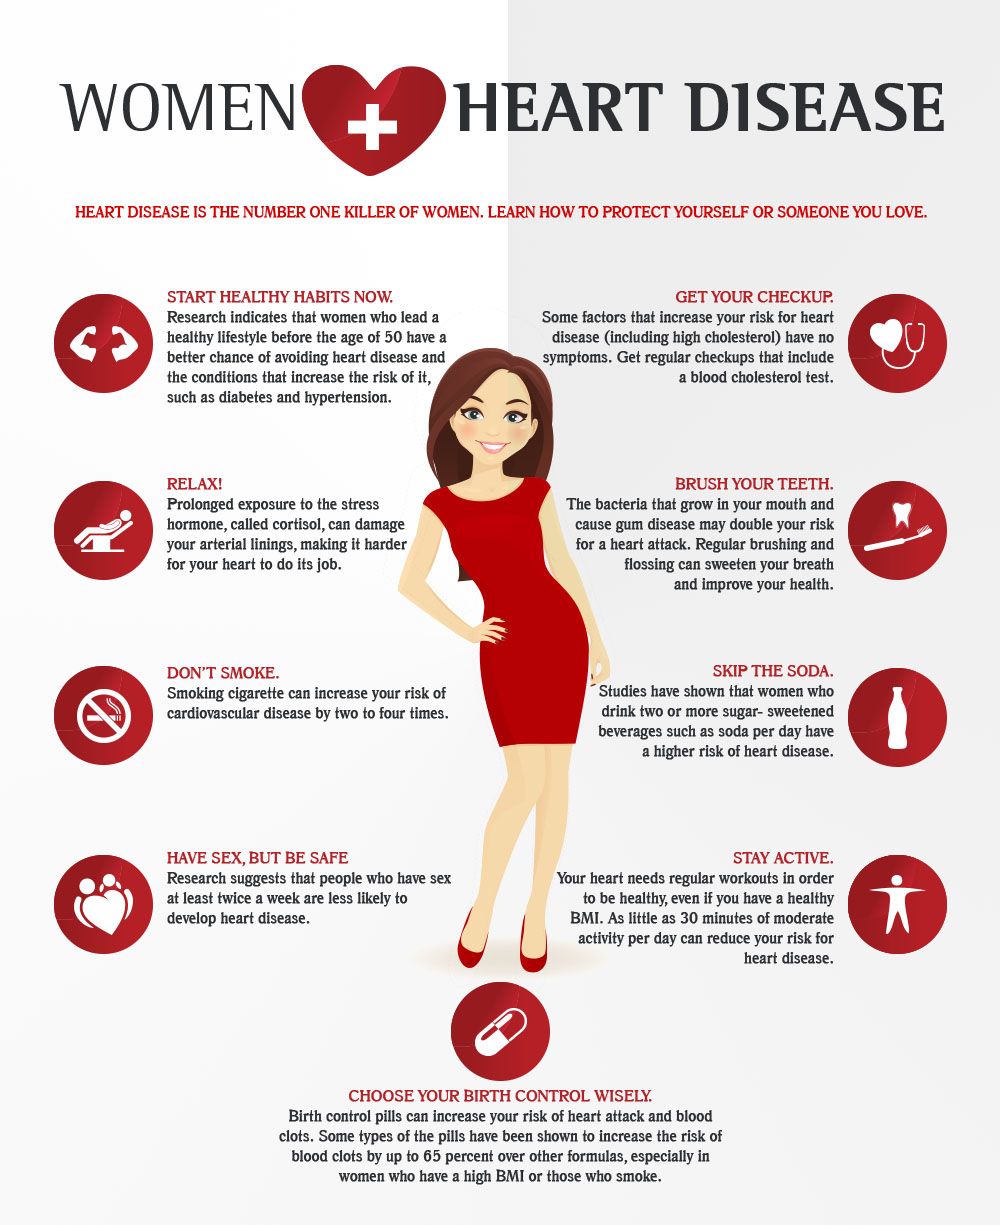 Healthy habits to prevent heart disease in women